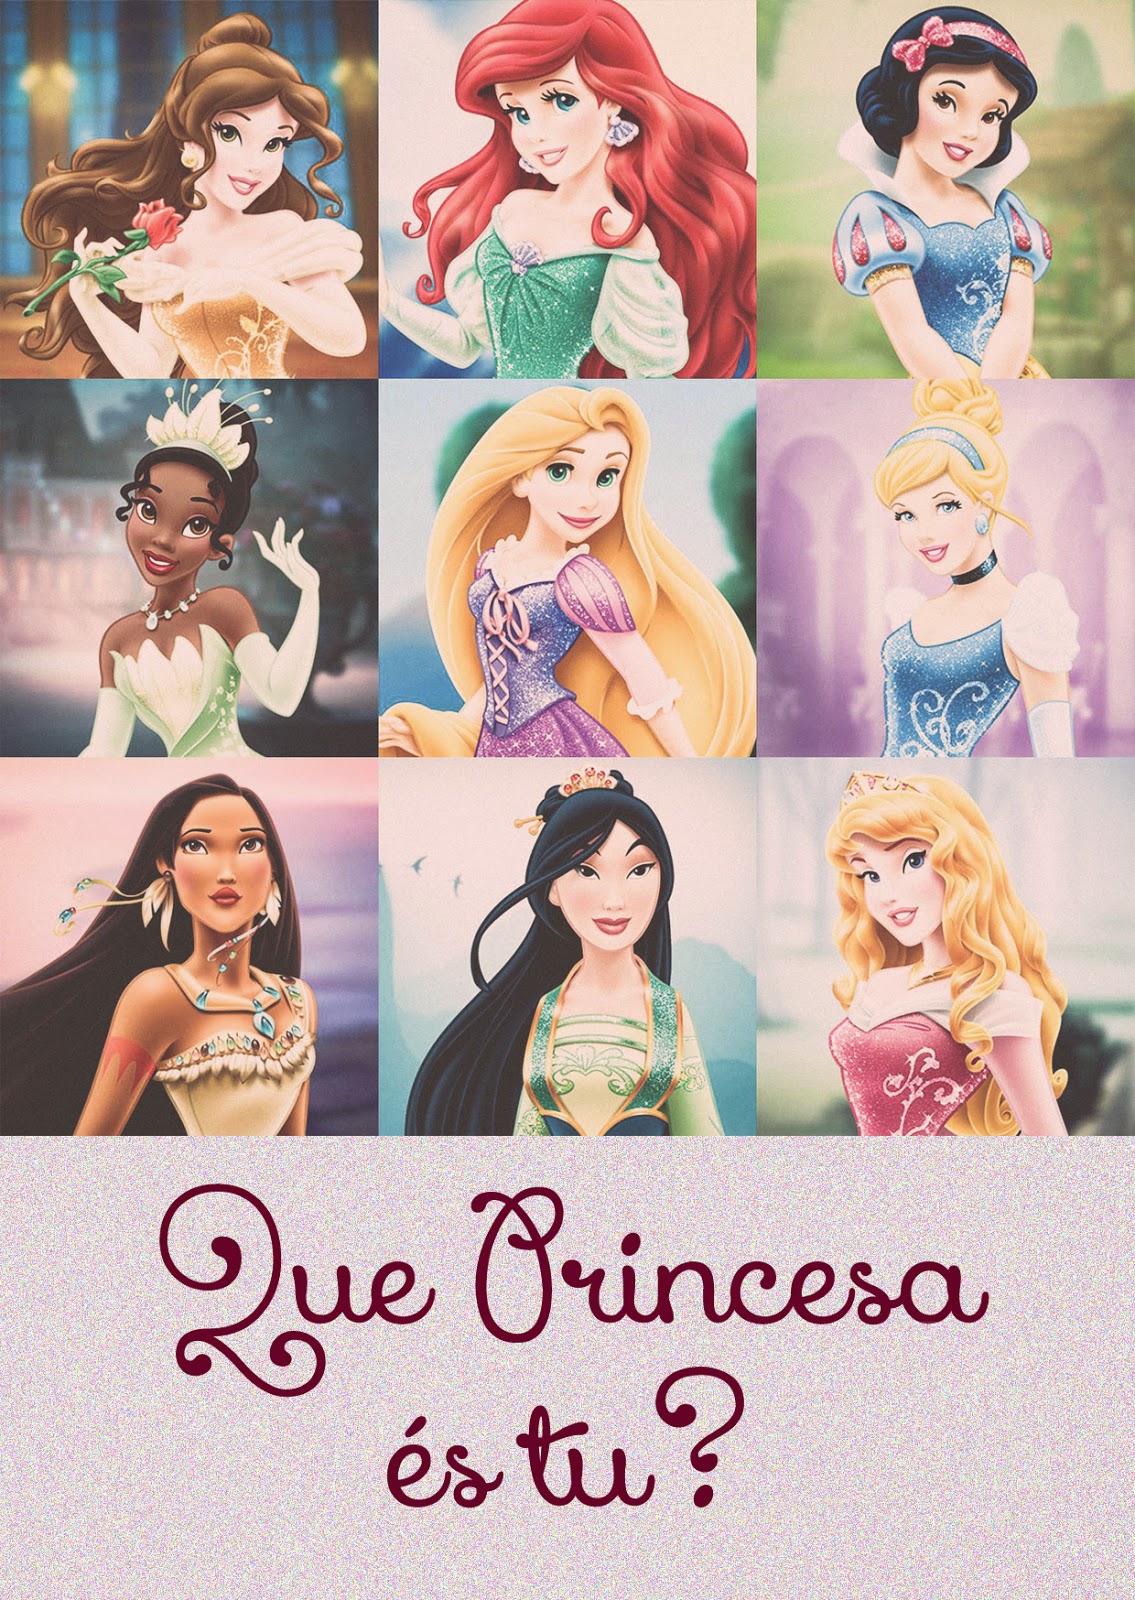 http://www.zimbio.com/quiz/bibMfGO8ax1/Which+Disney+Princess+Are+You